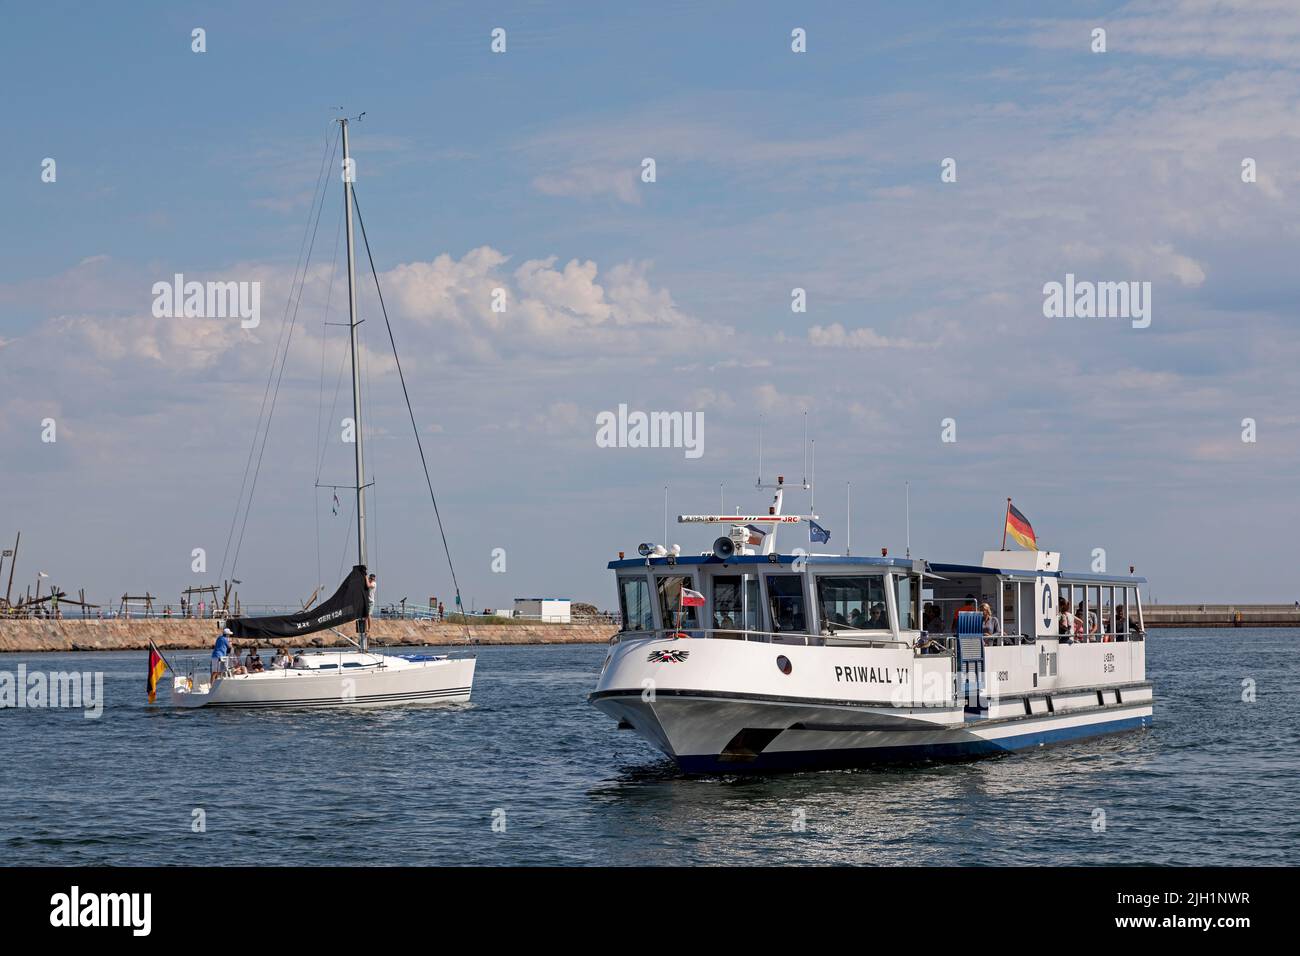 Sailing boat, foot passenger ferry, Priwall, Travemünde, Lübeck, Schleswig-Holstein, Germany Stock Photo